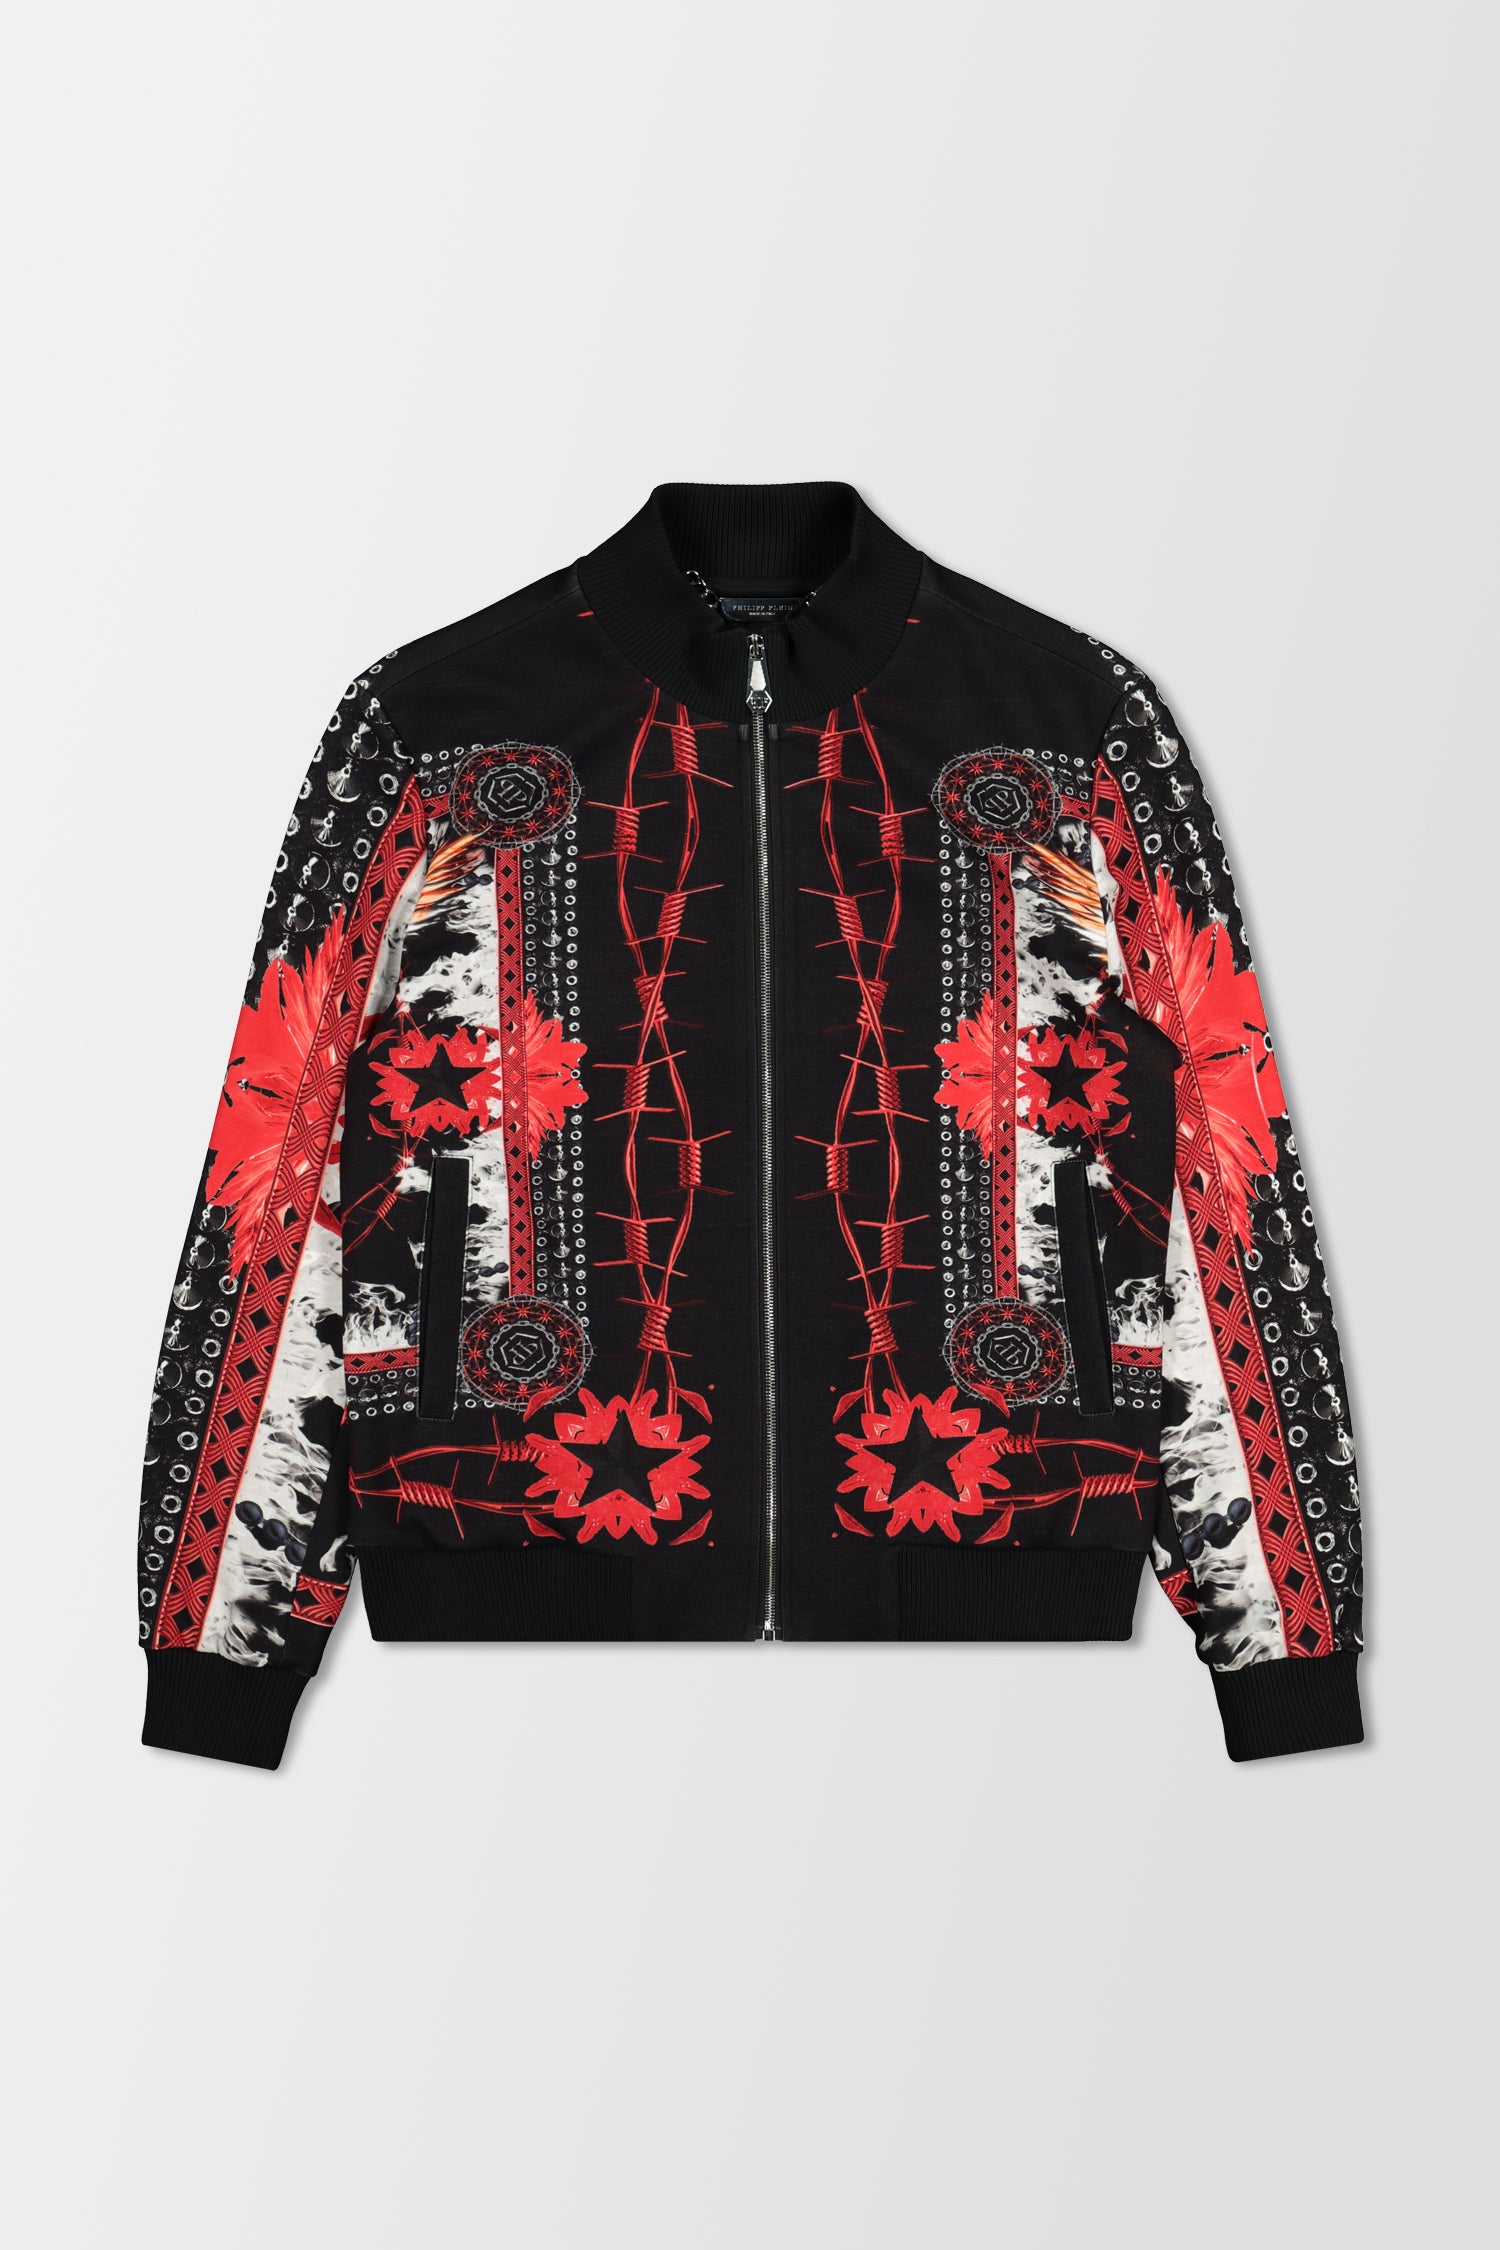 Philipp Plein Black Foulard Texture Jacket